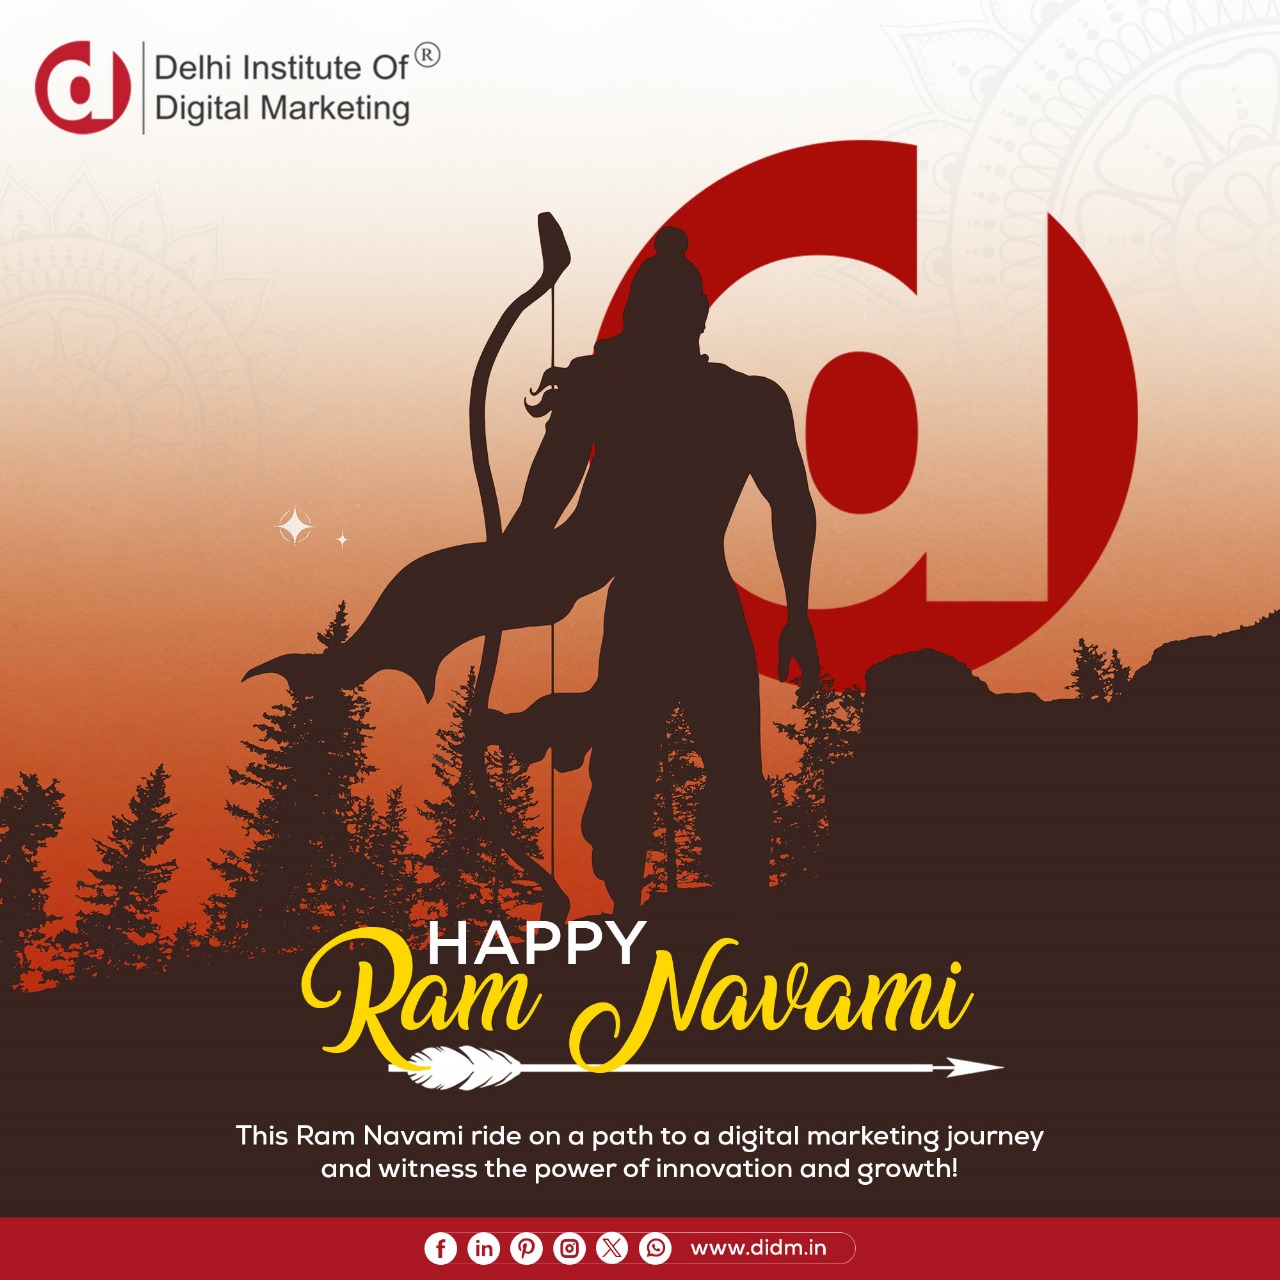 DIDM Wishes You All A Happy Shree Ram Navami!